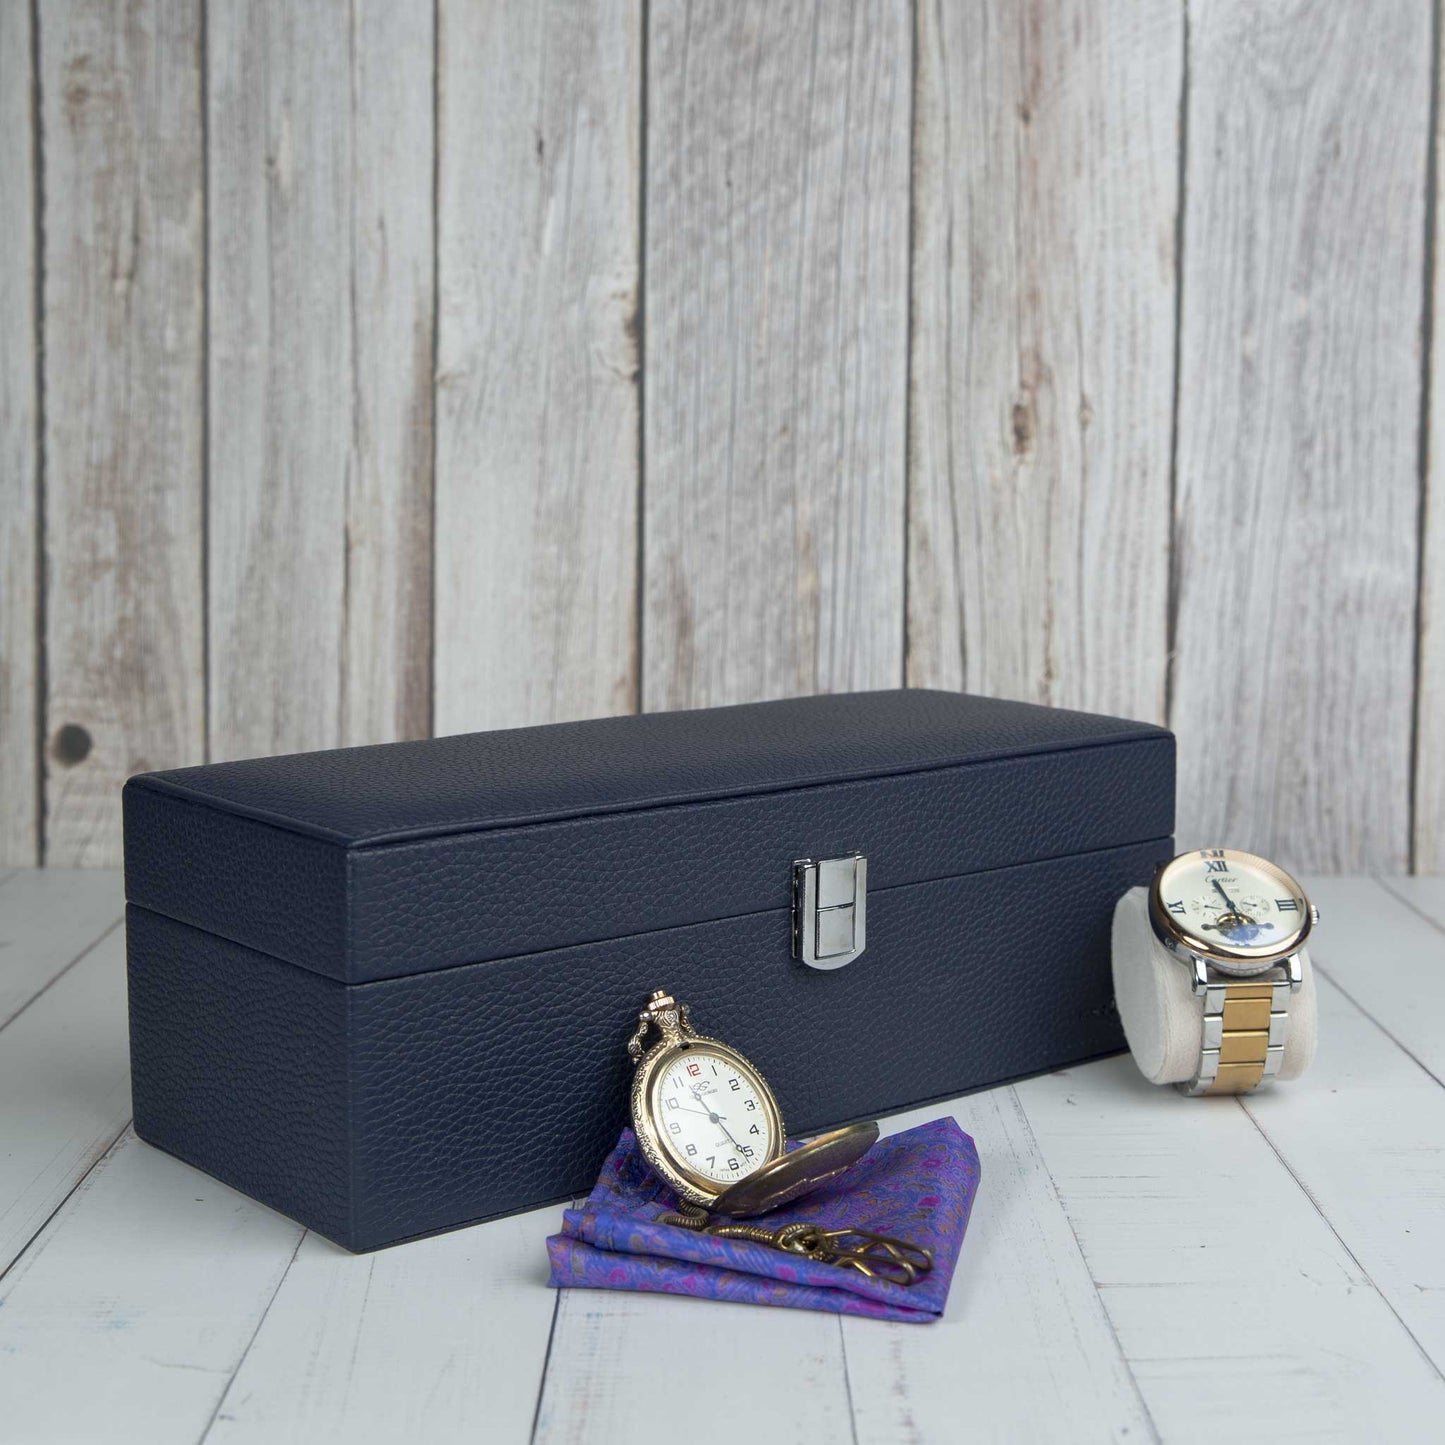 Studio Decorai Watch Box Serenity - Sapphire Tone - Handcrafted Leather Watch Box